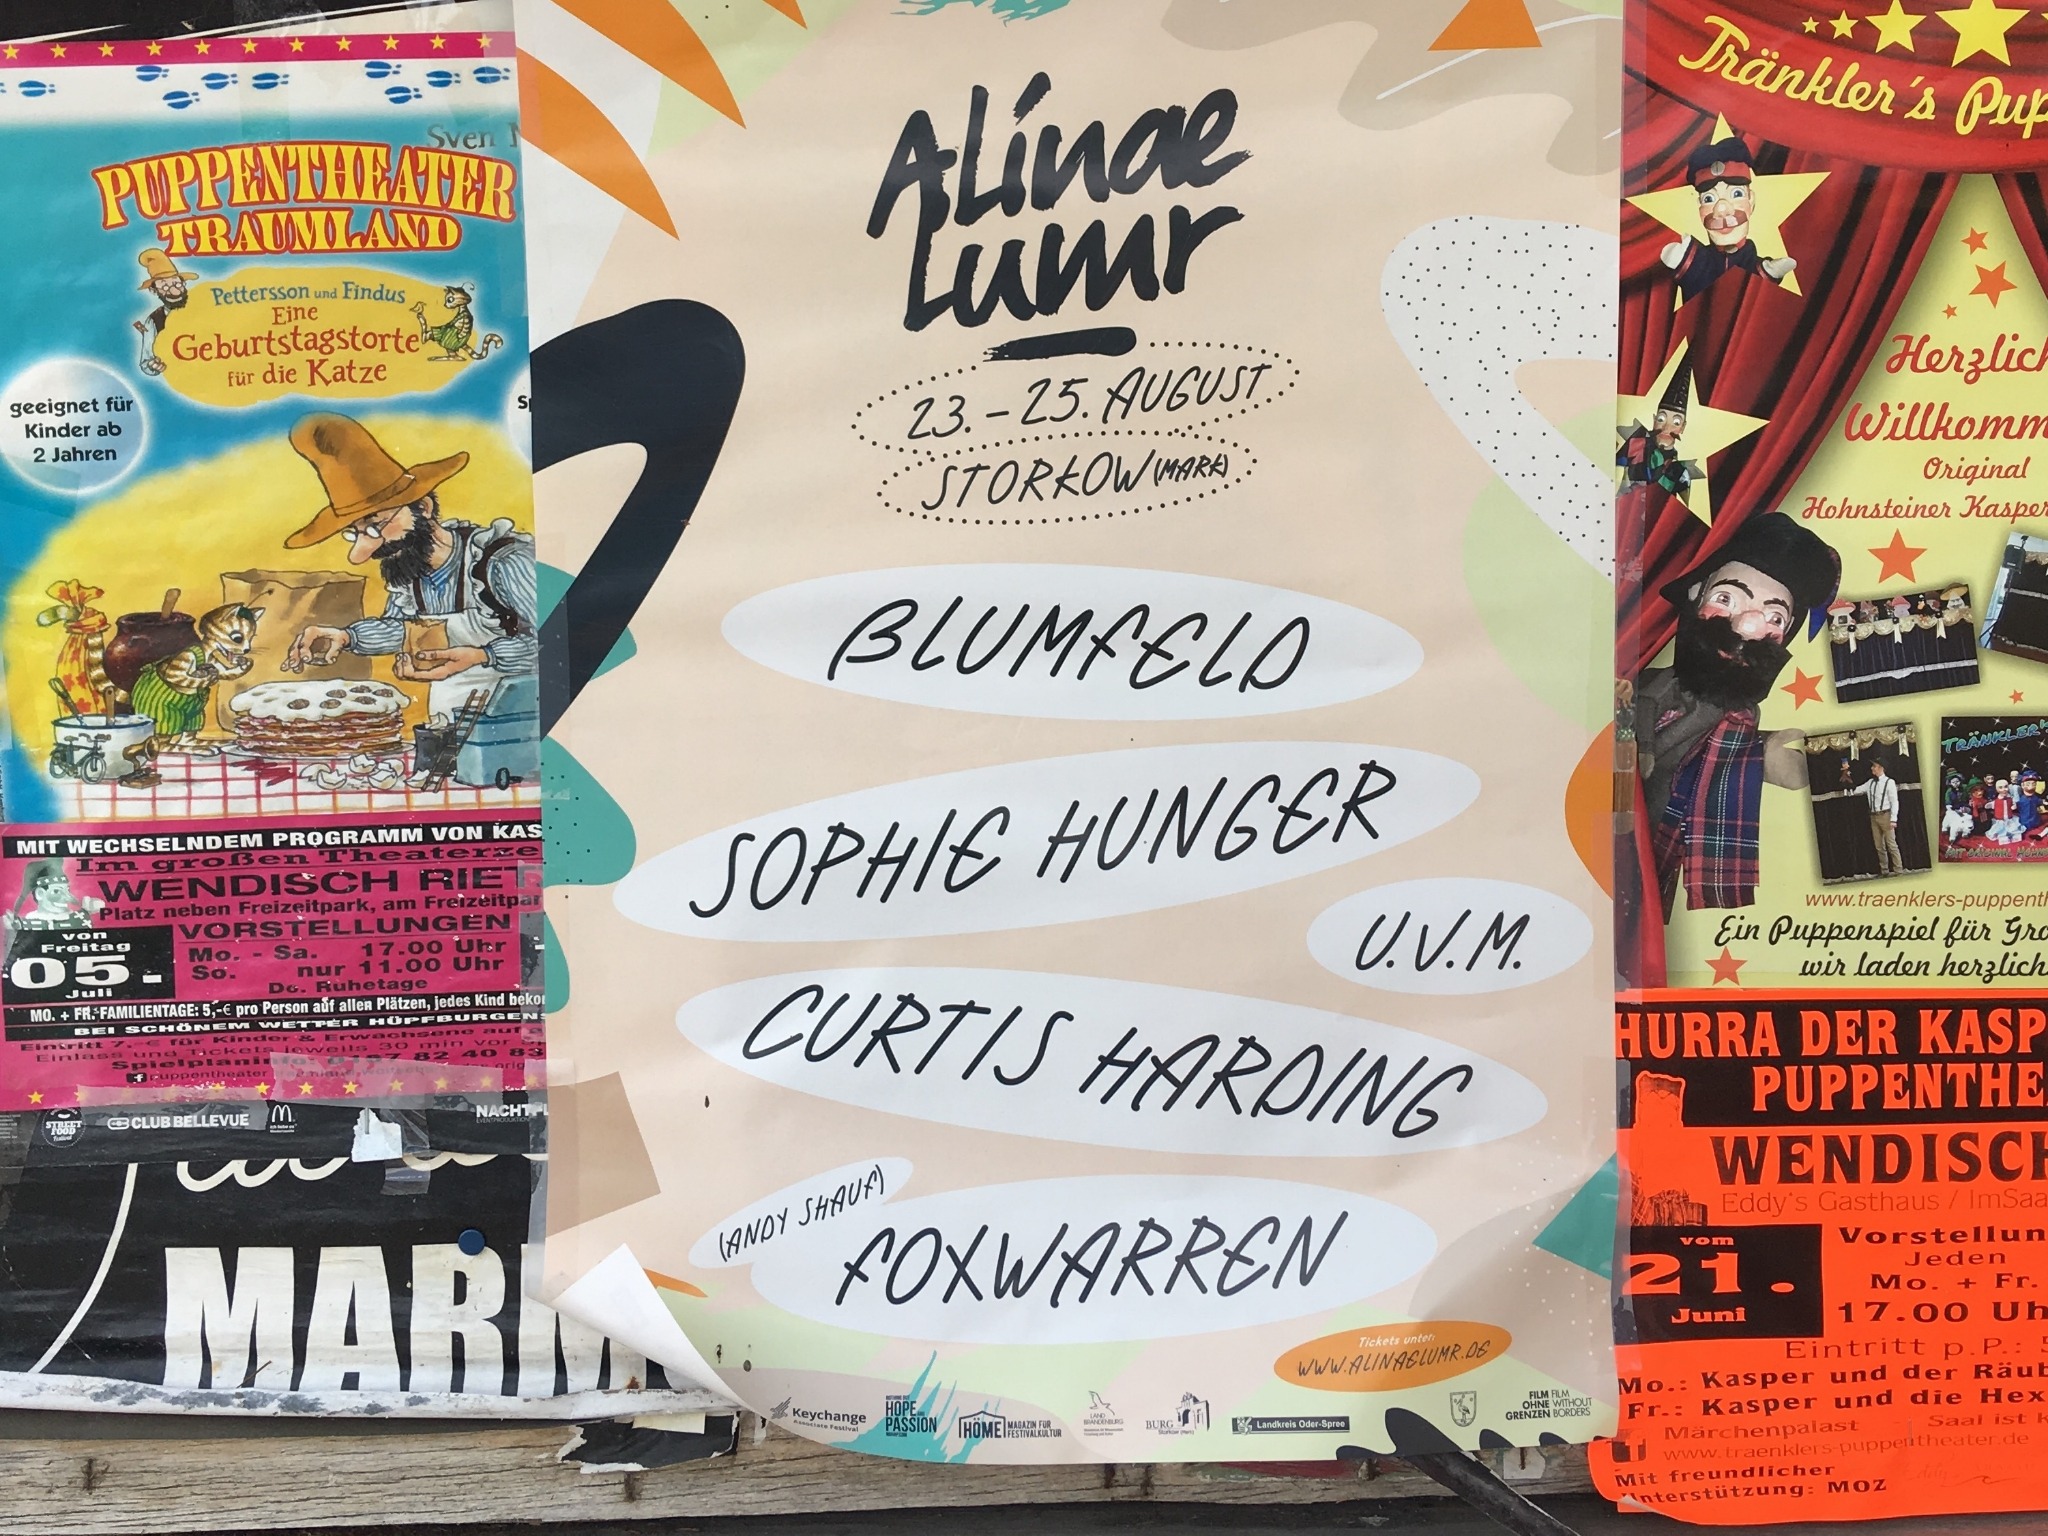 Werbeplakat des Festivals Alinae Lumr in Storkow.